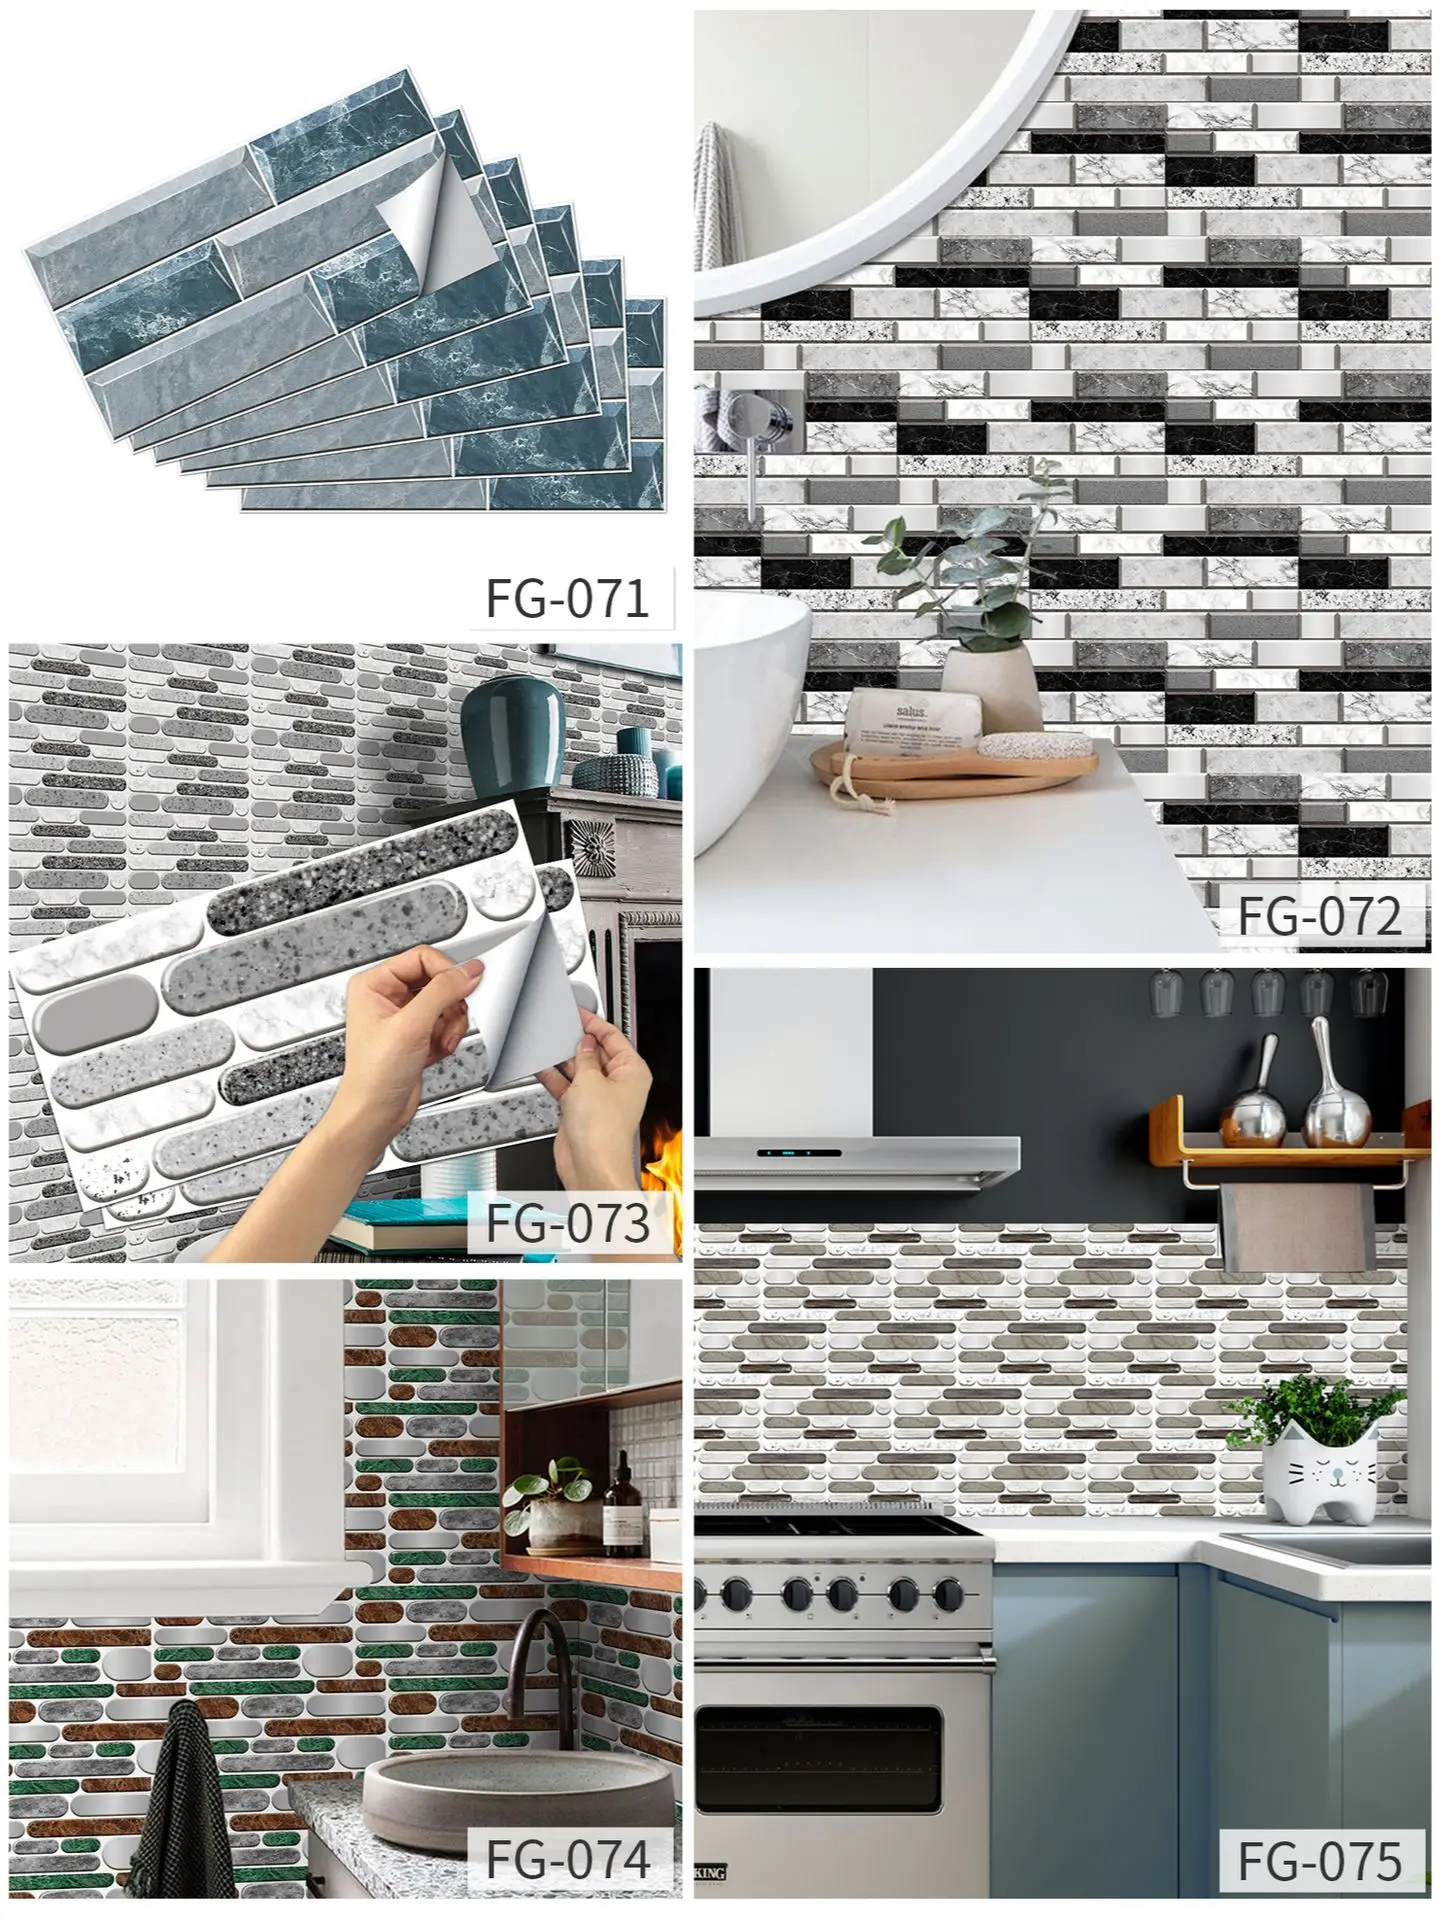 Mosaic Self Adhesive Tile Backsplash Wall Sticker Bathroom Kitchen Home decor 